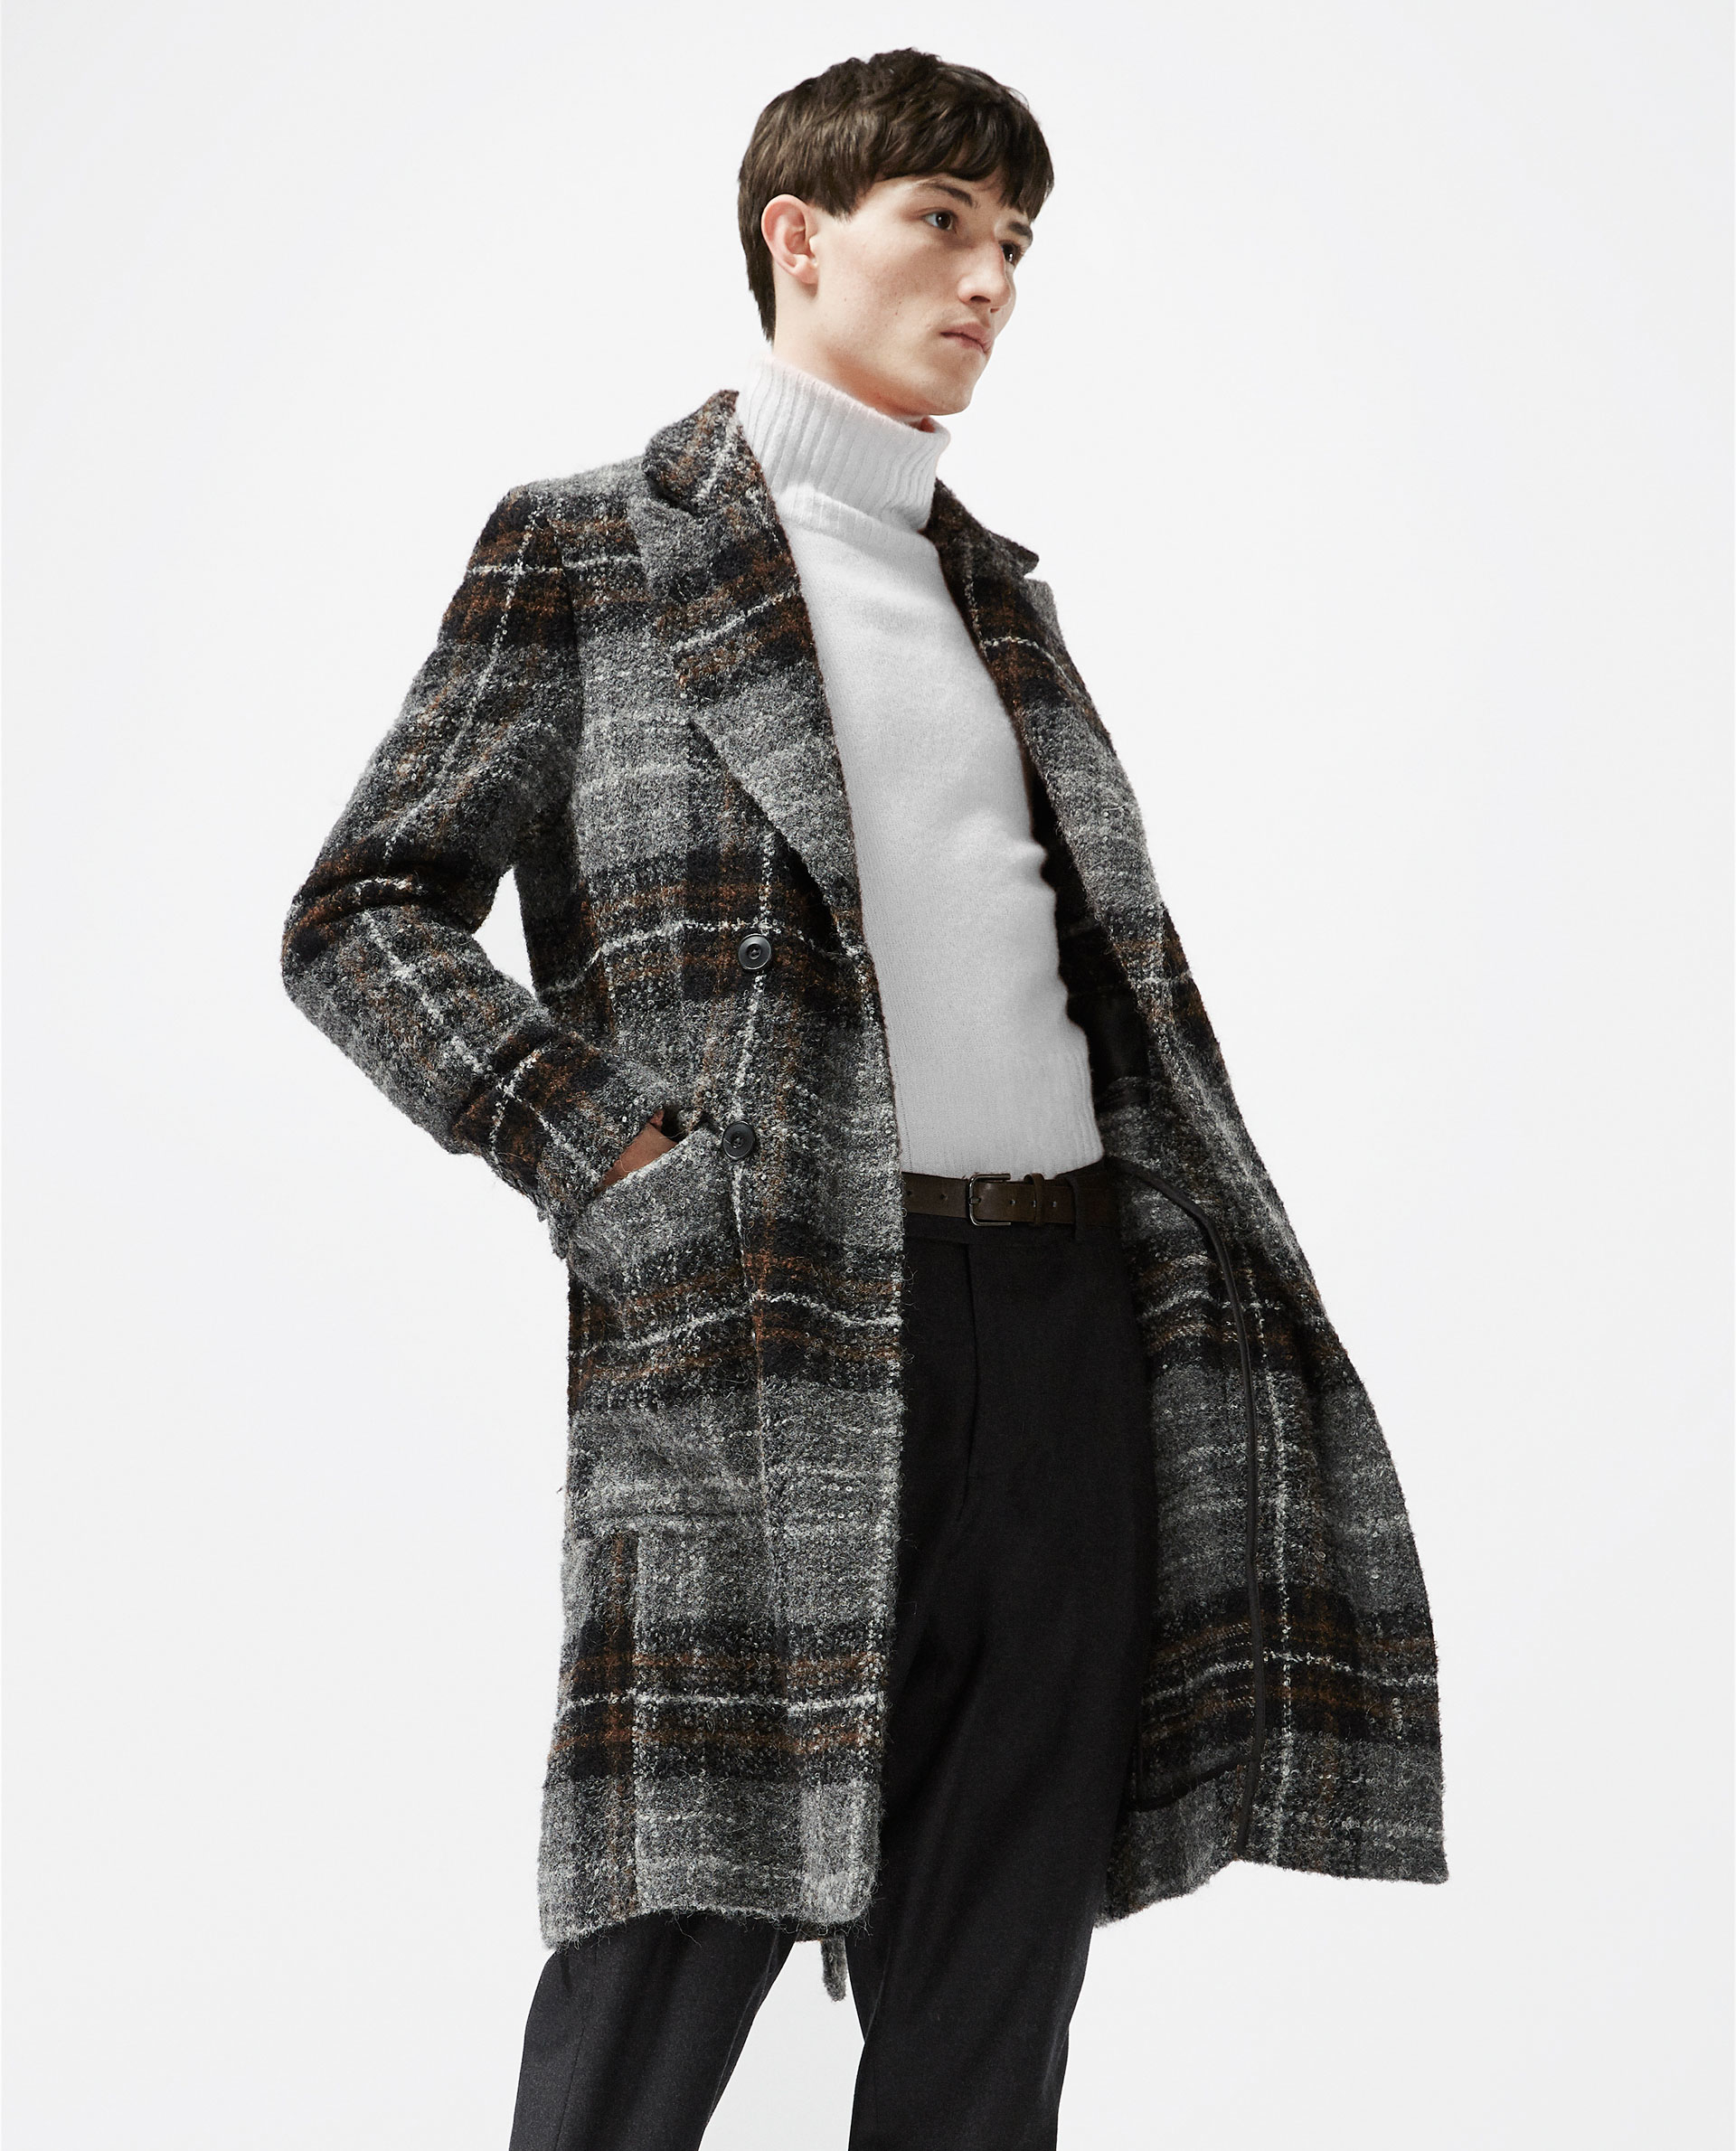 EMS Freeship Fashion 2015 Jacket for Men Business Wool